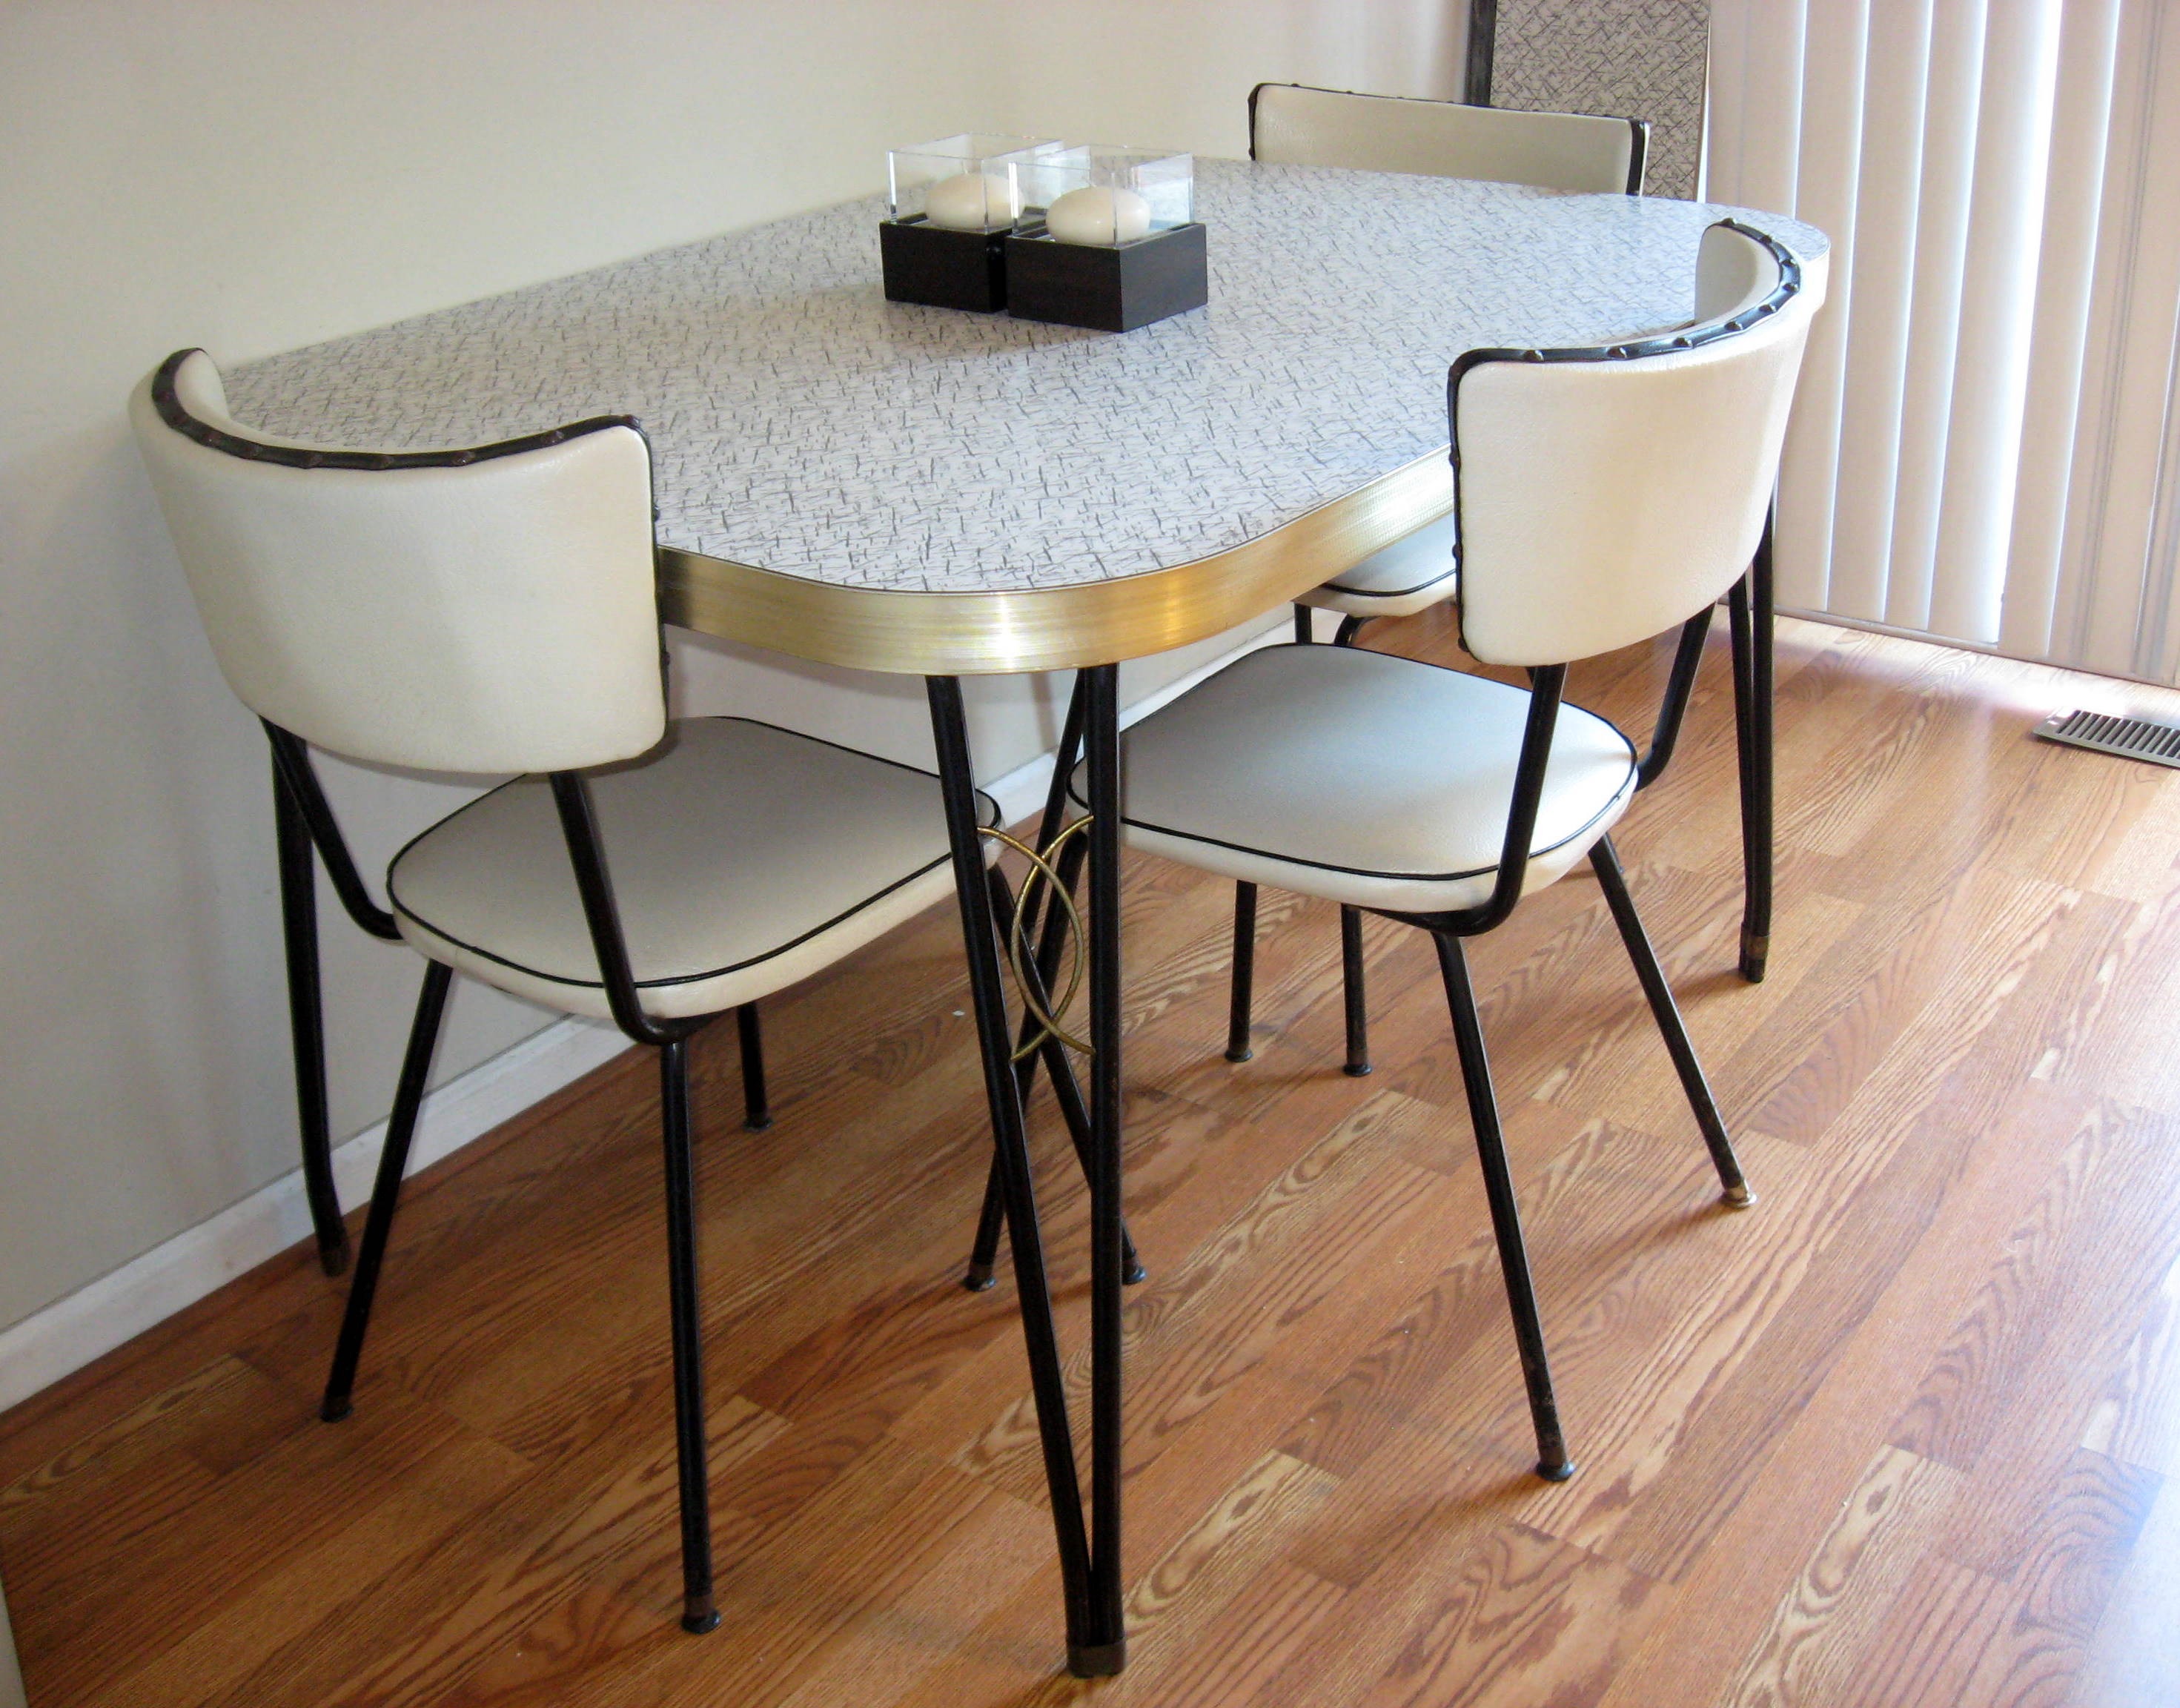 Attachment retro kitchen table and chairs set (982) - Diabelcissokho